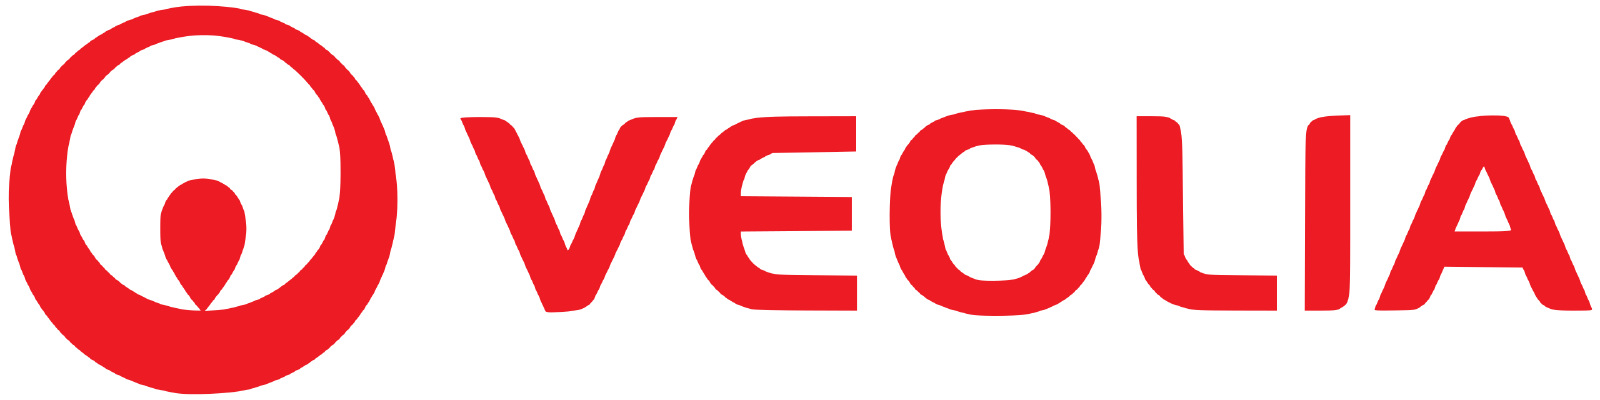 Veolia_logo.svg.png